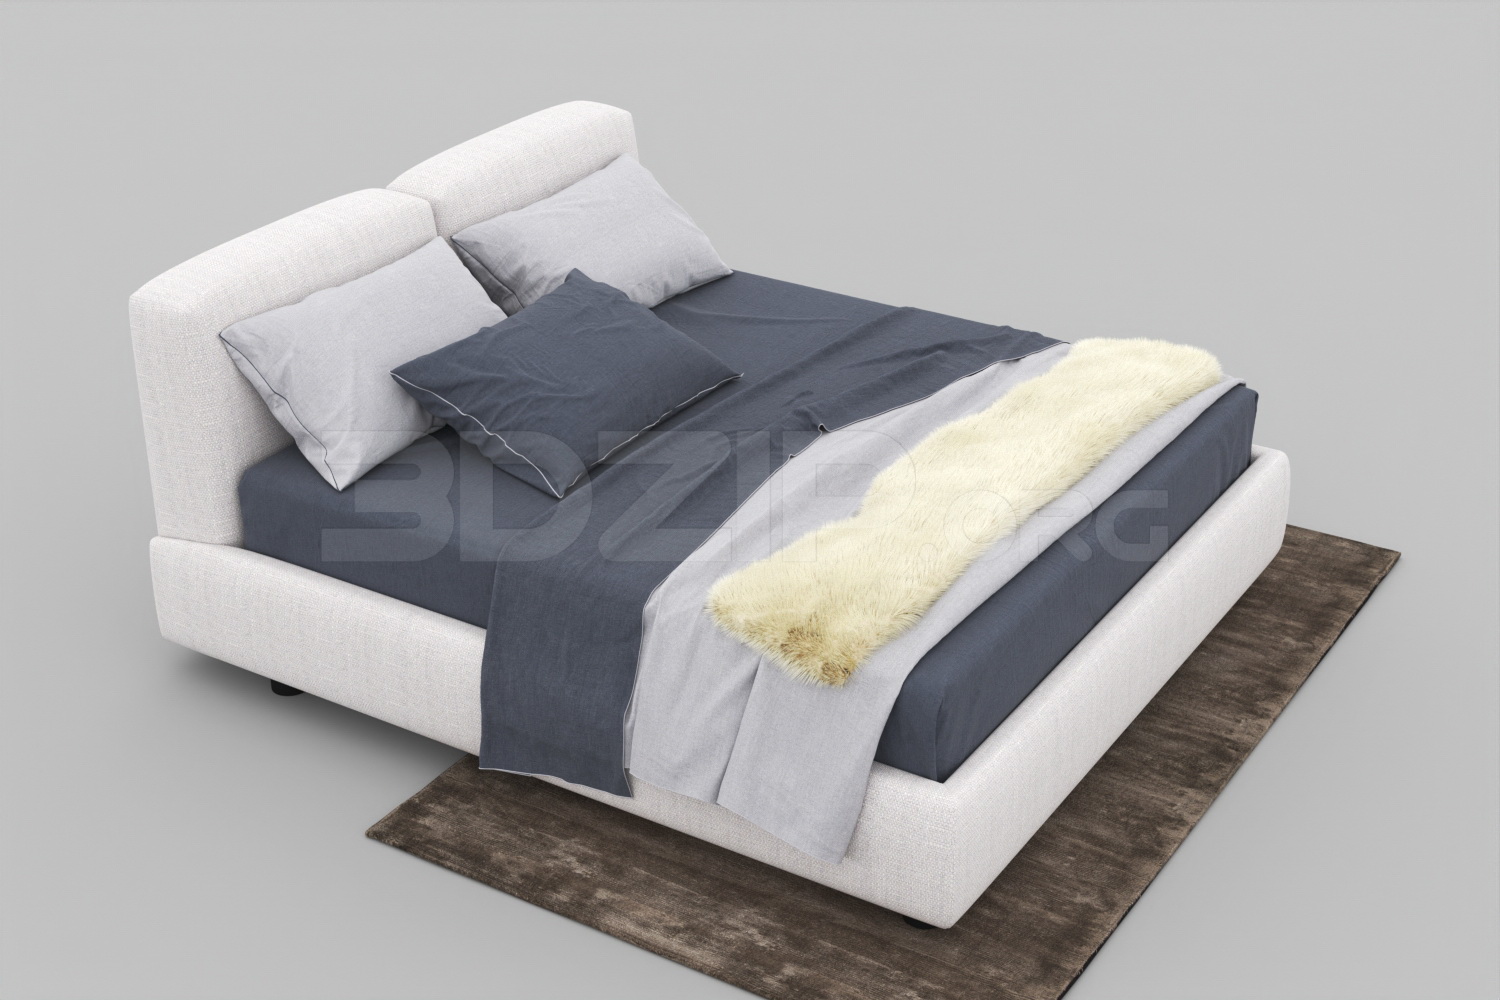 529. Download Free Bed Model By Kts Hieu Saker